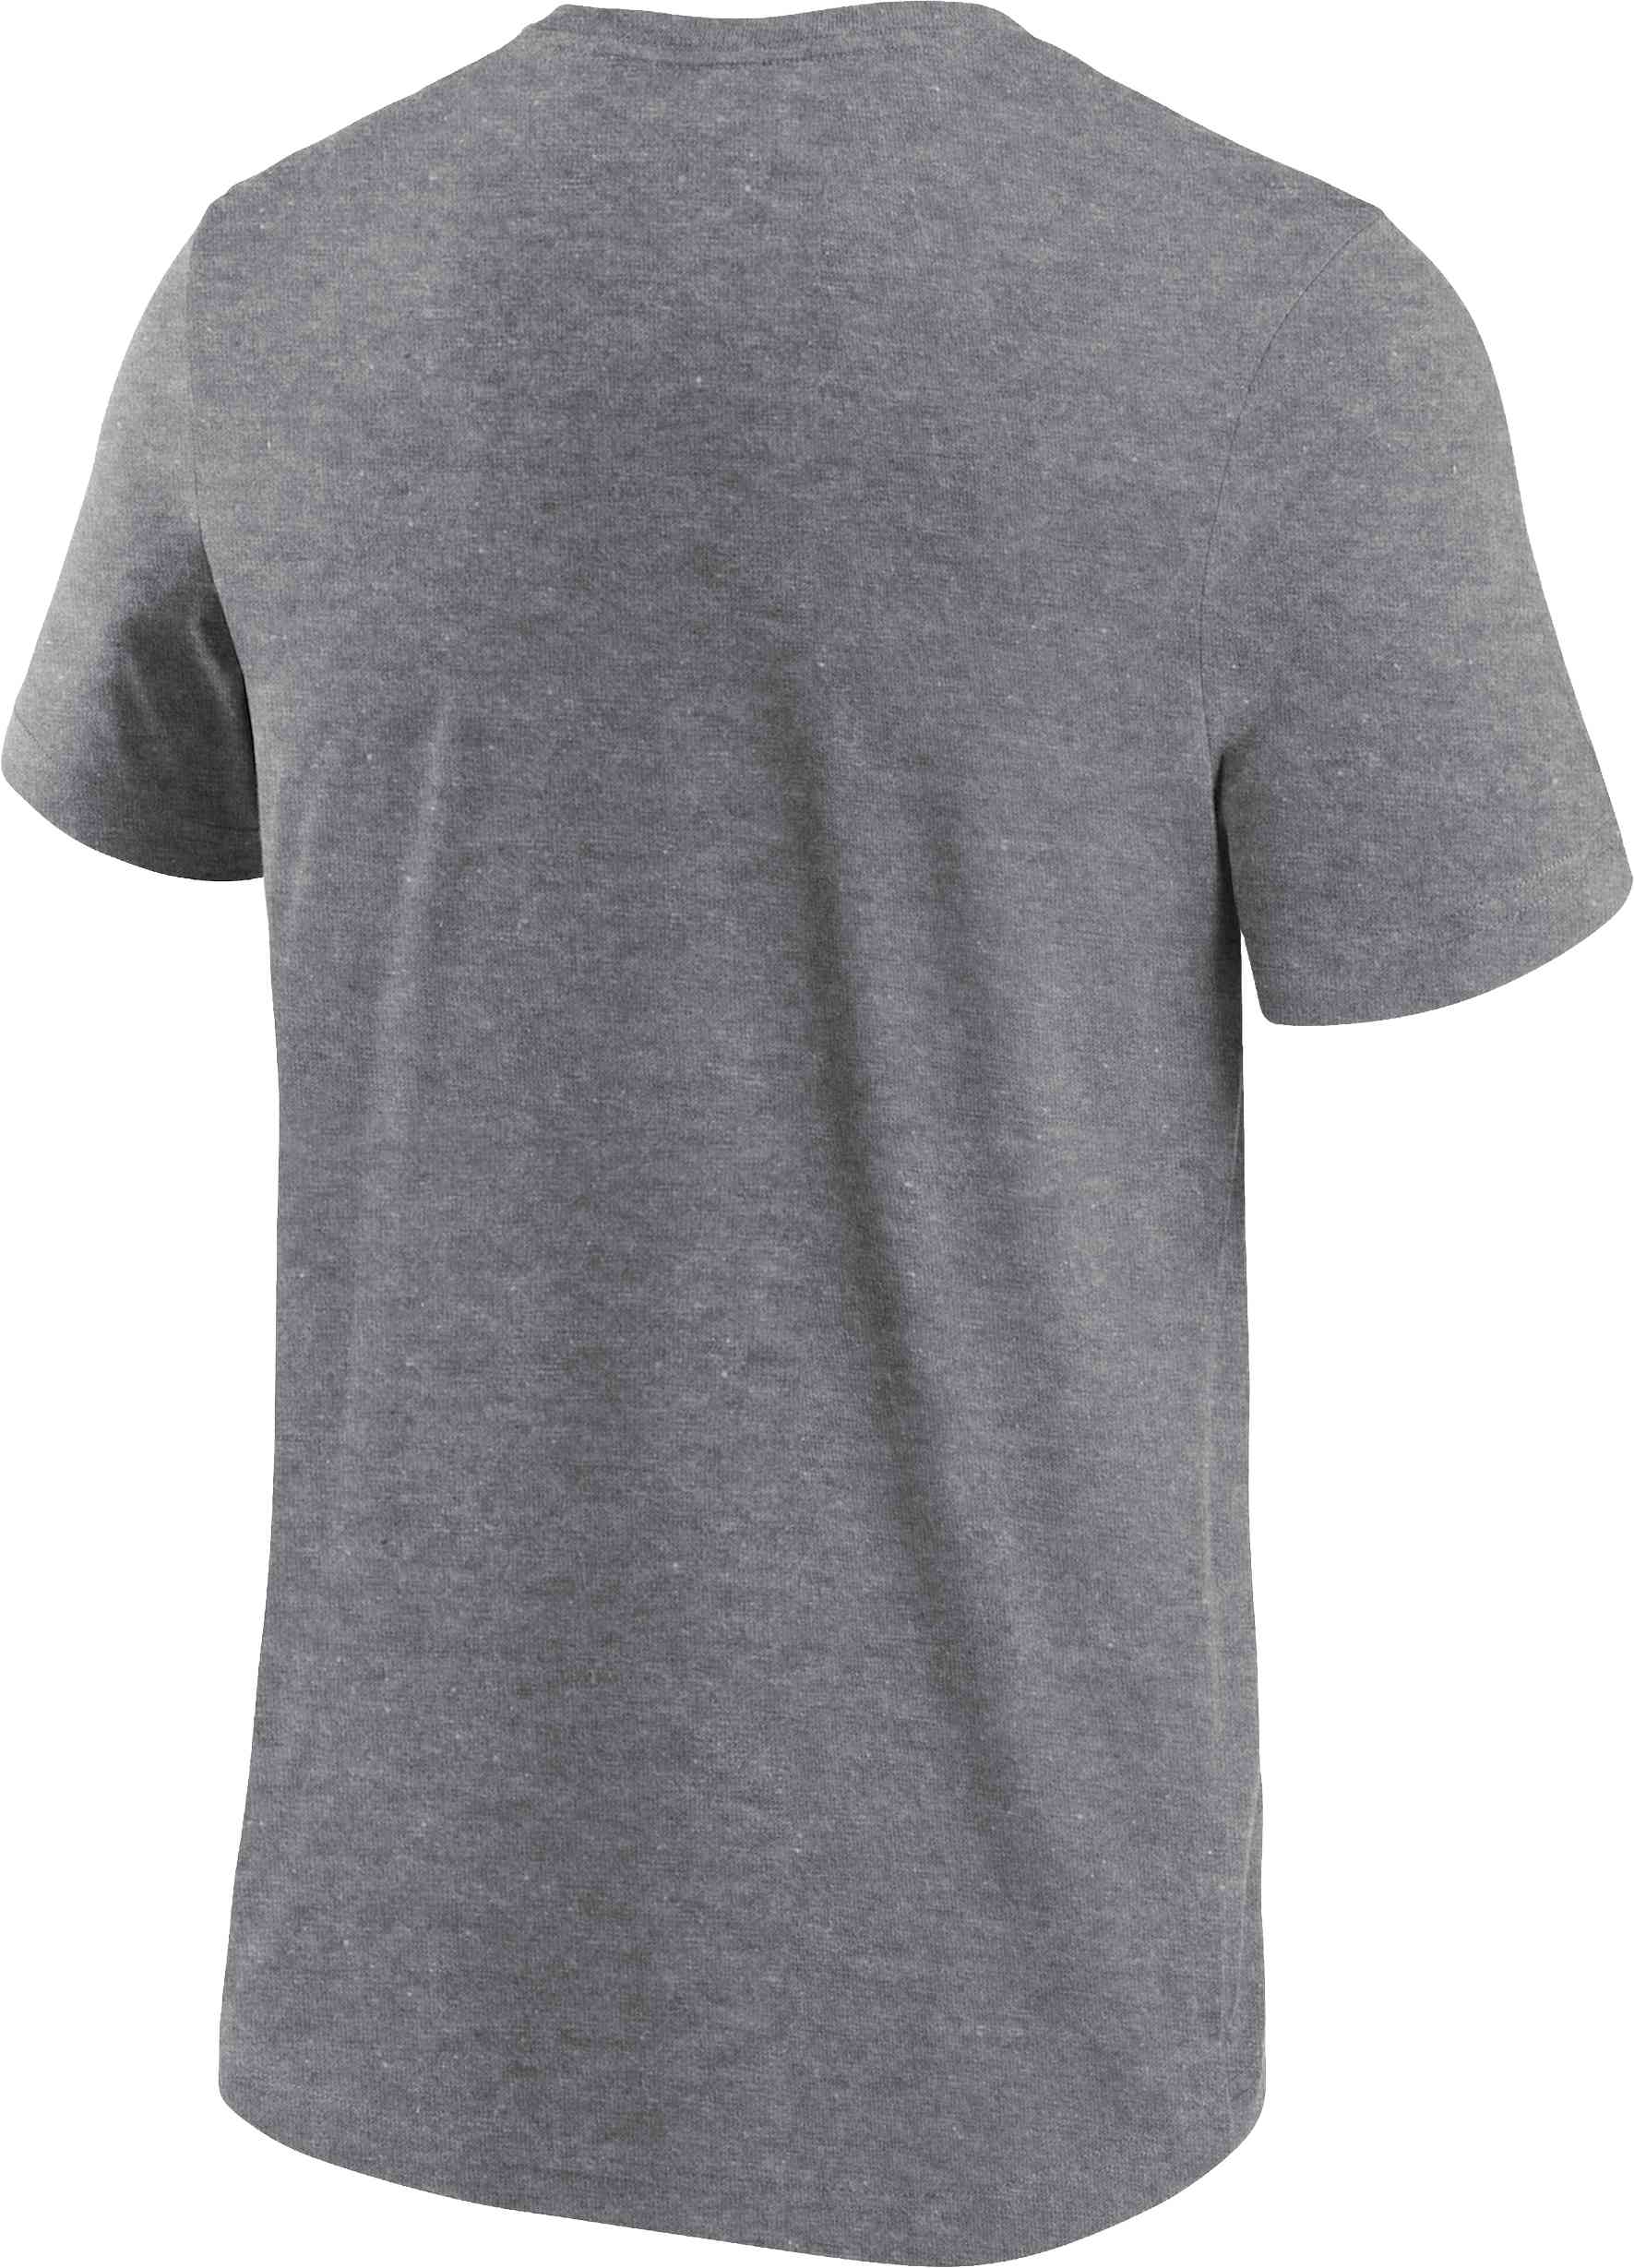 Fanatics - NFL Tampa Bay Buccaneers Primary Logo Graphic T-Shirt